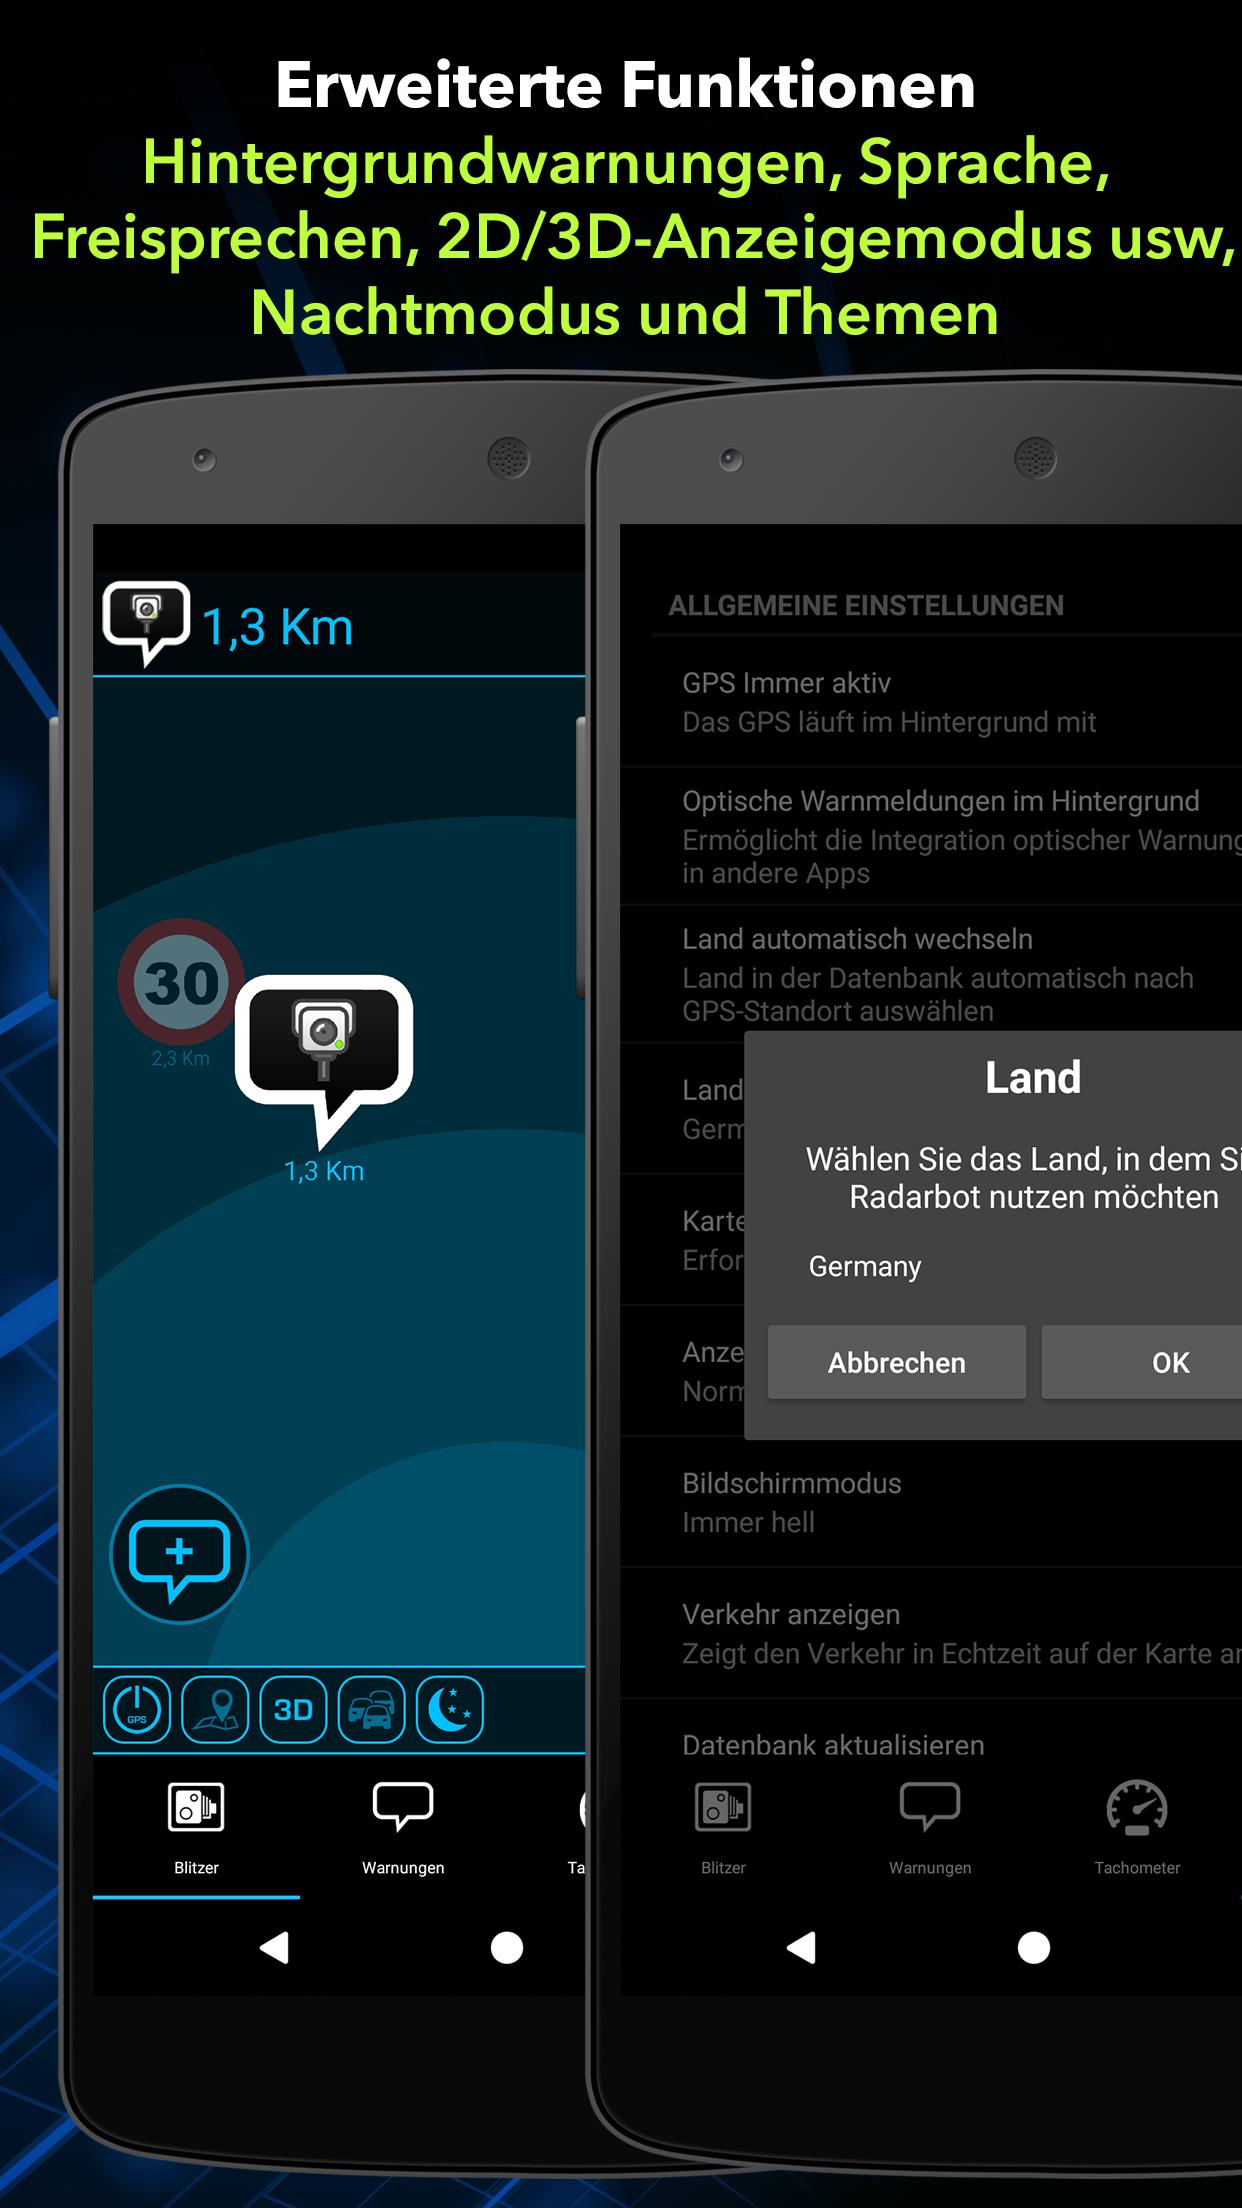 Radarwarner. Blitzer DE APK for Android Download